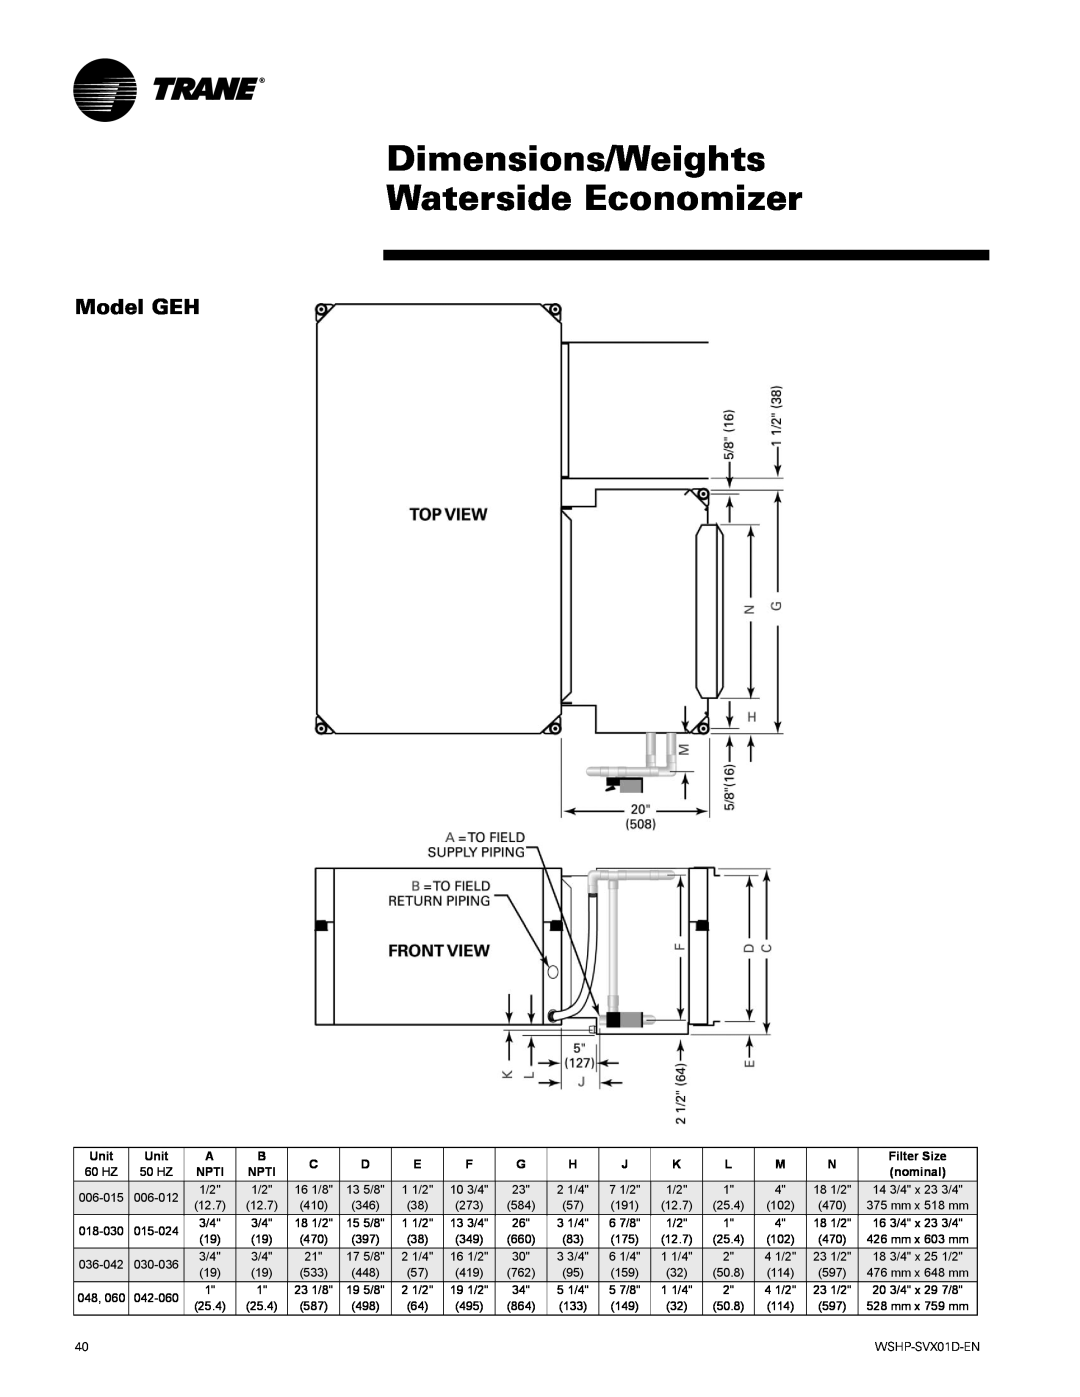 Trane GEV manual Dimensions/Weights Waterside Economizer, Model GEH 